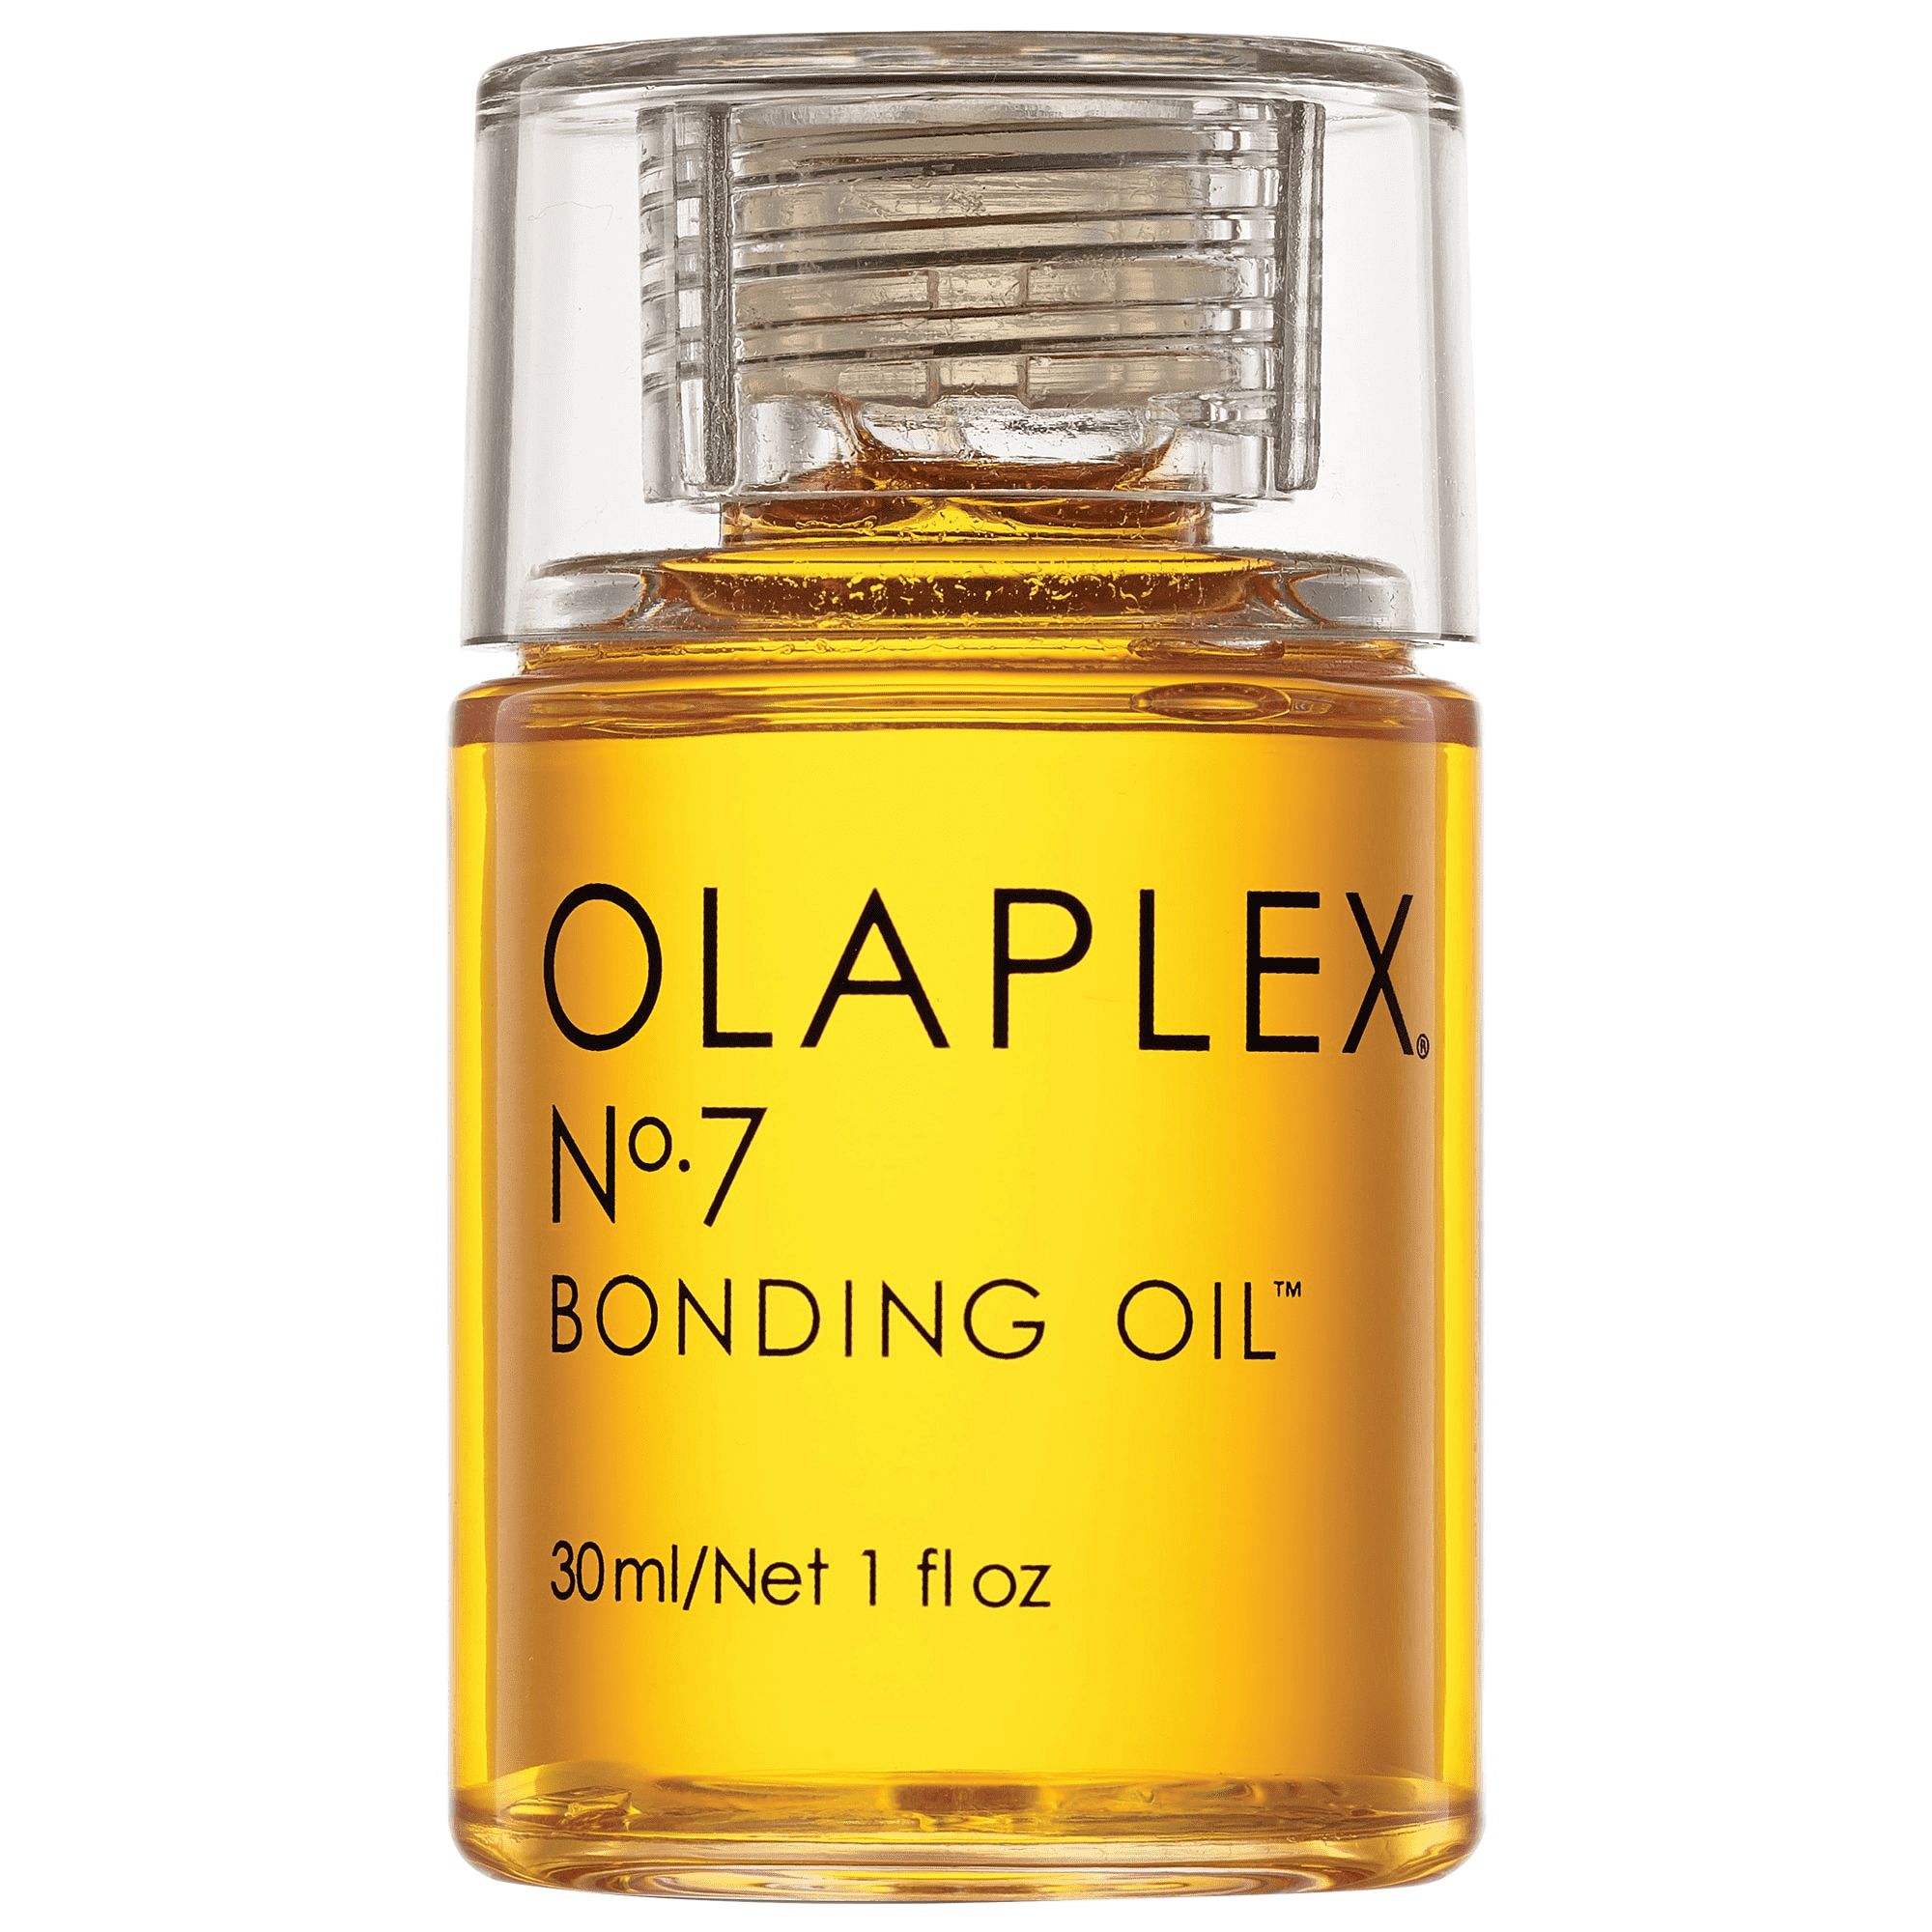 No. 7 Bonding Oil - Olaplex